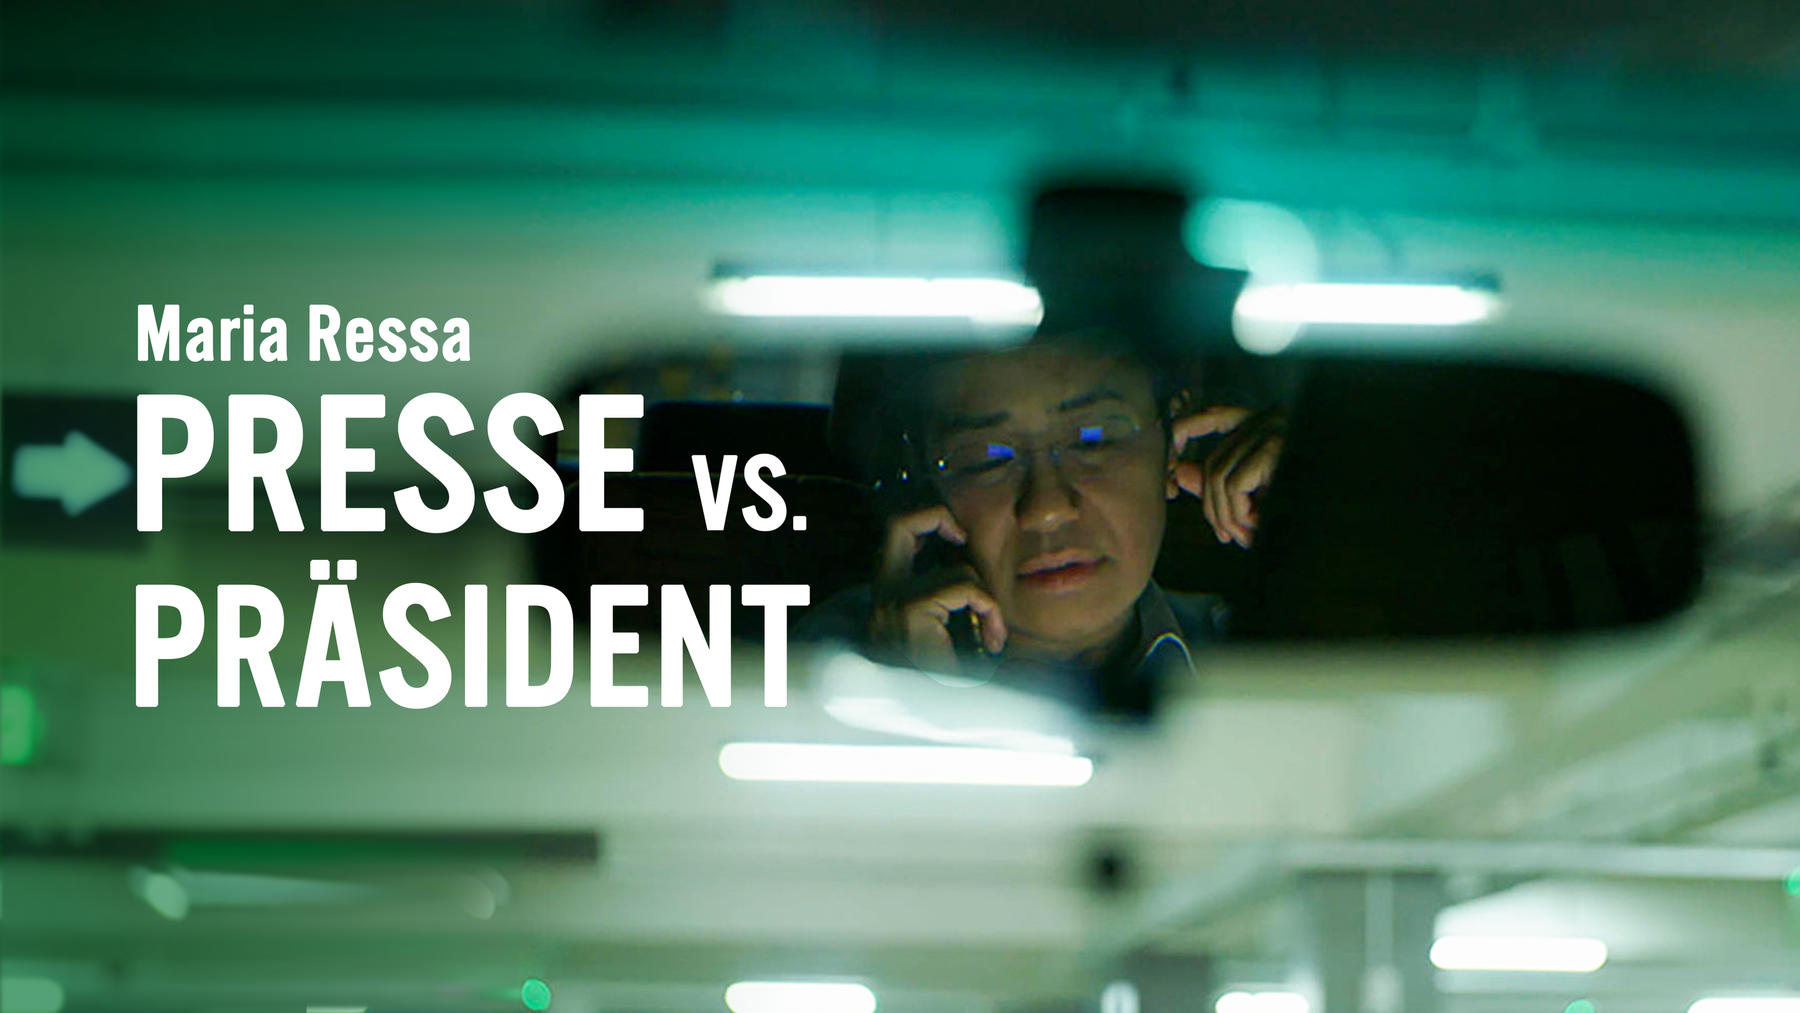 Maria Ressa - Presse vs. Präsident